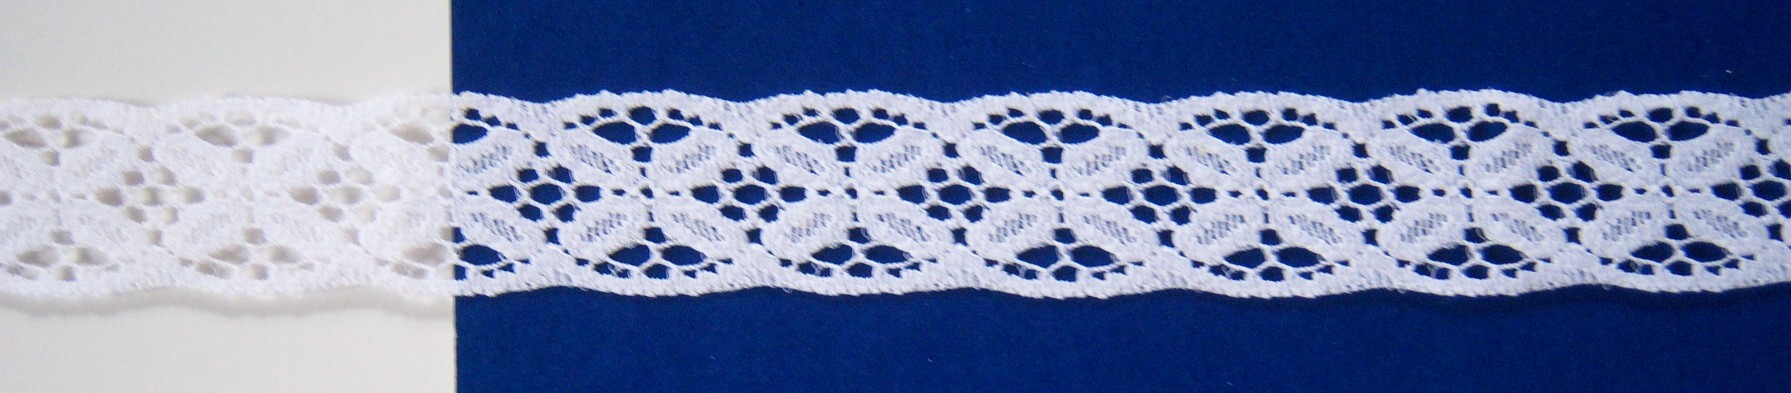 White #1144 Nylon 1 1/8" Lace